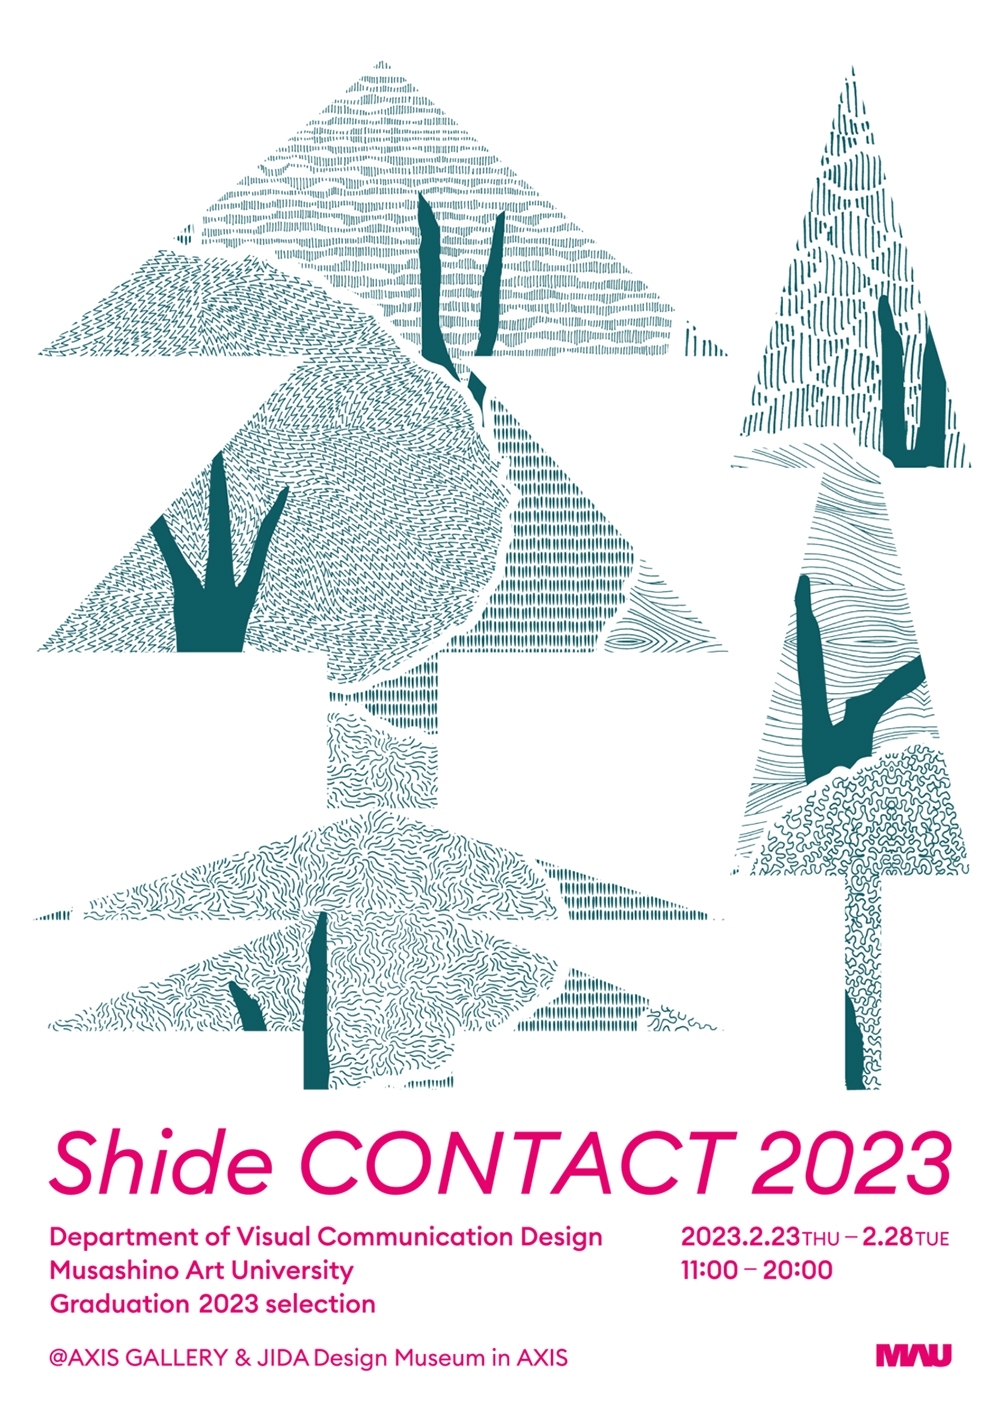 視覚伝達デザイン学科 2022年度卒業制作選抜展「shide CONTACT 2023」